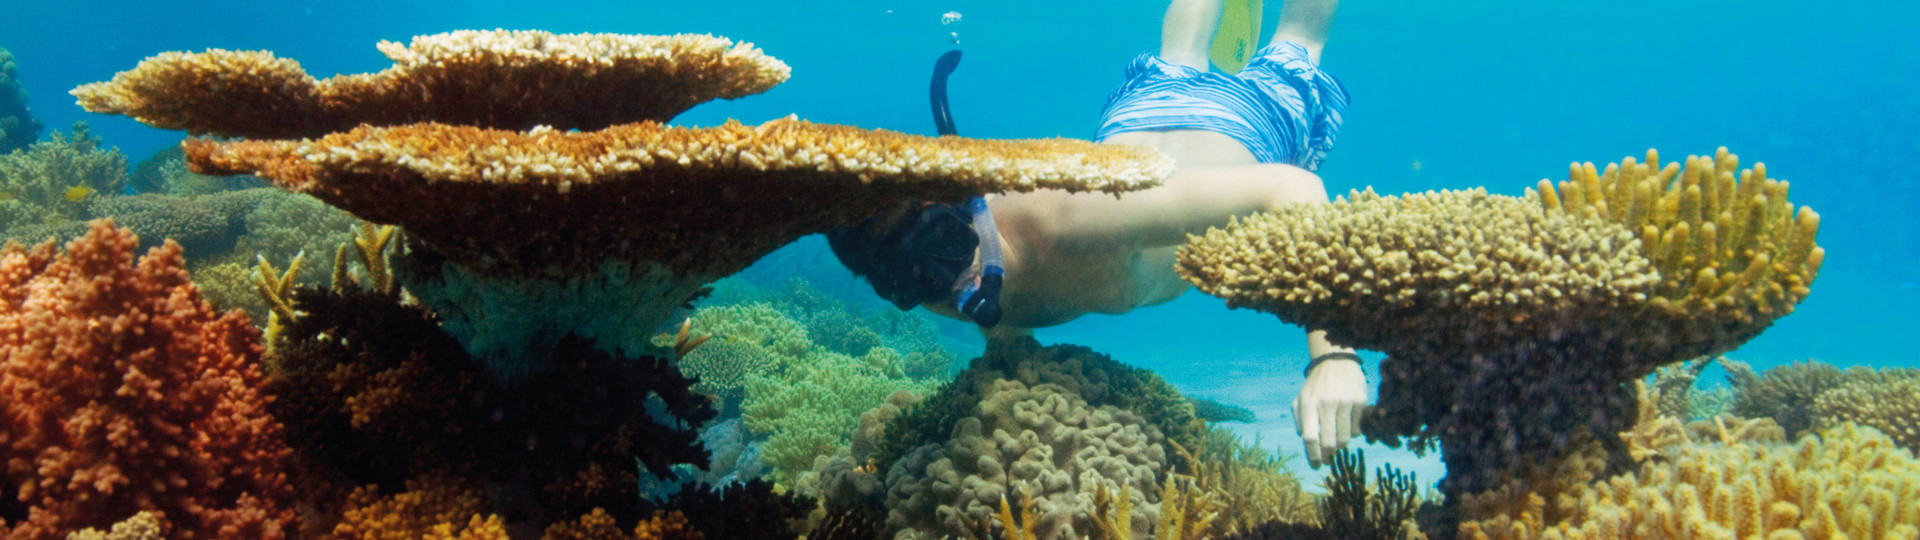 Snorkeler exploring coral reef